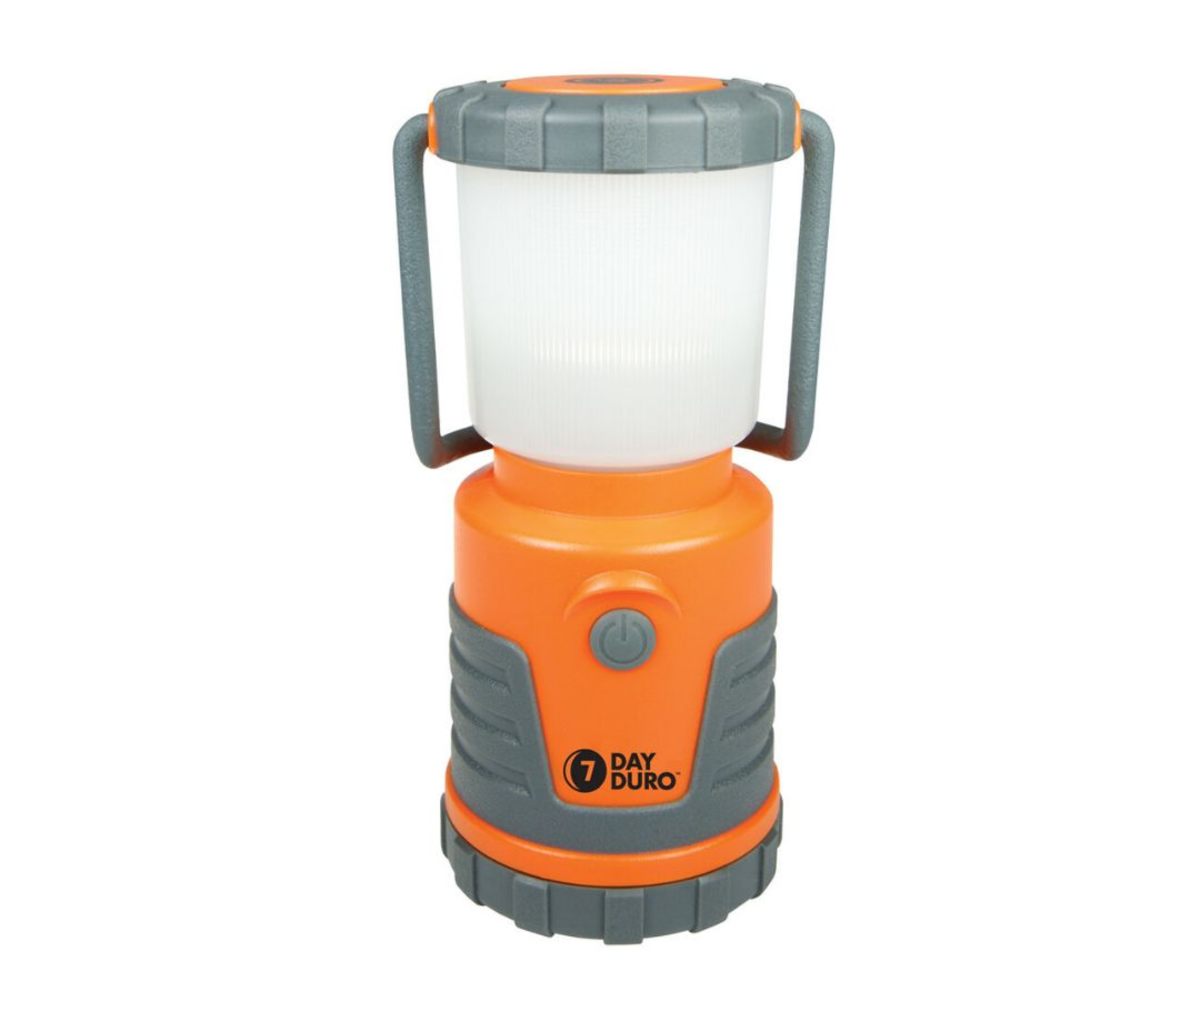 Ultimate Survival Technologies 45-Day LED Lantern